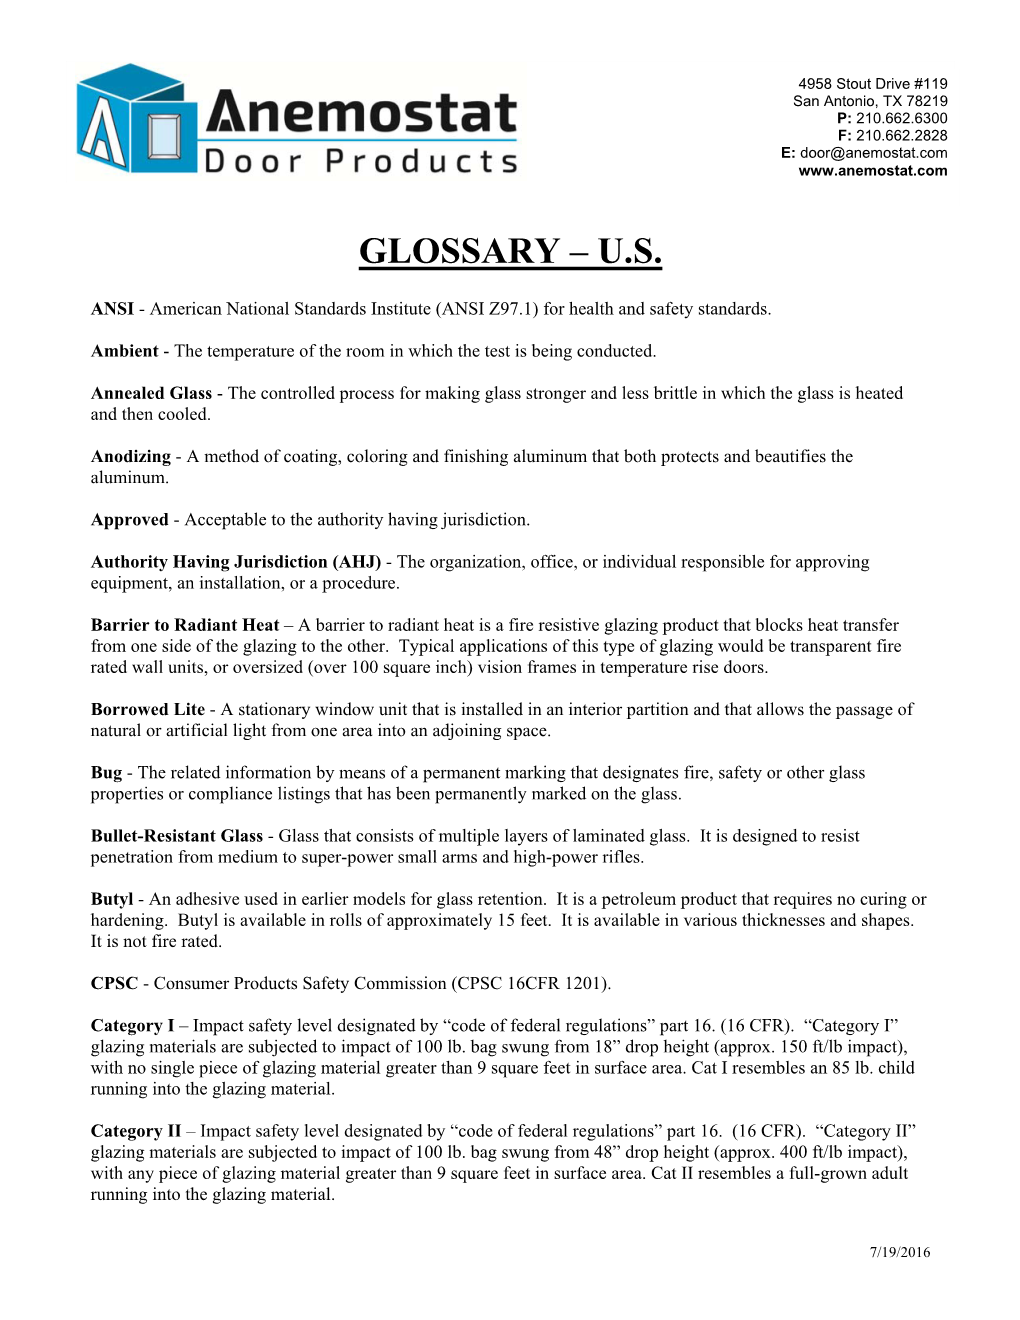 Glossary – U.S